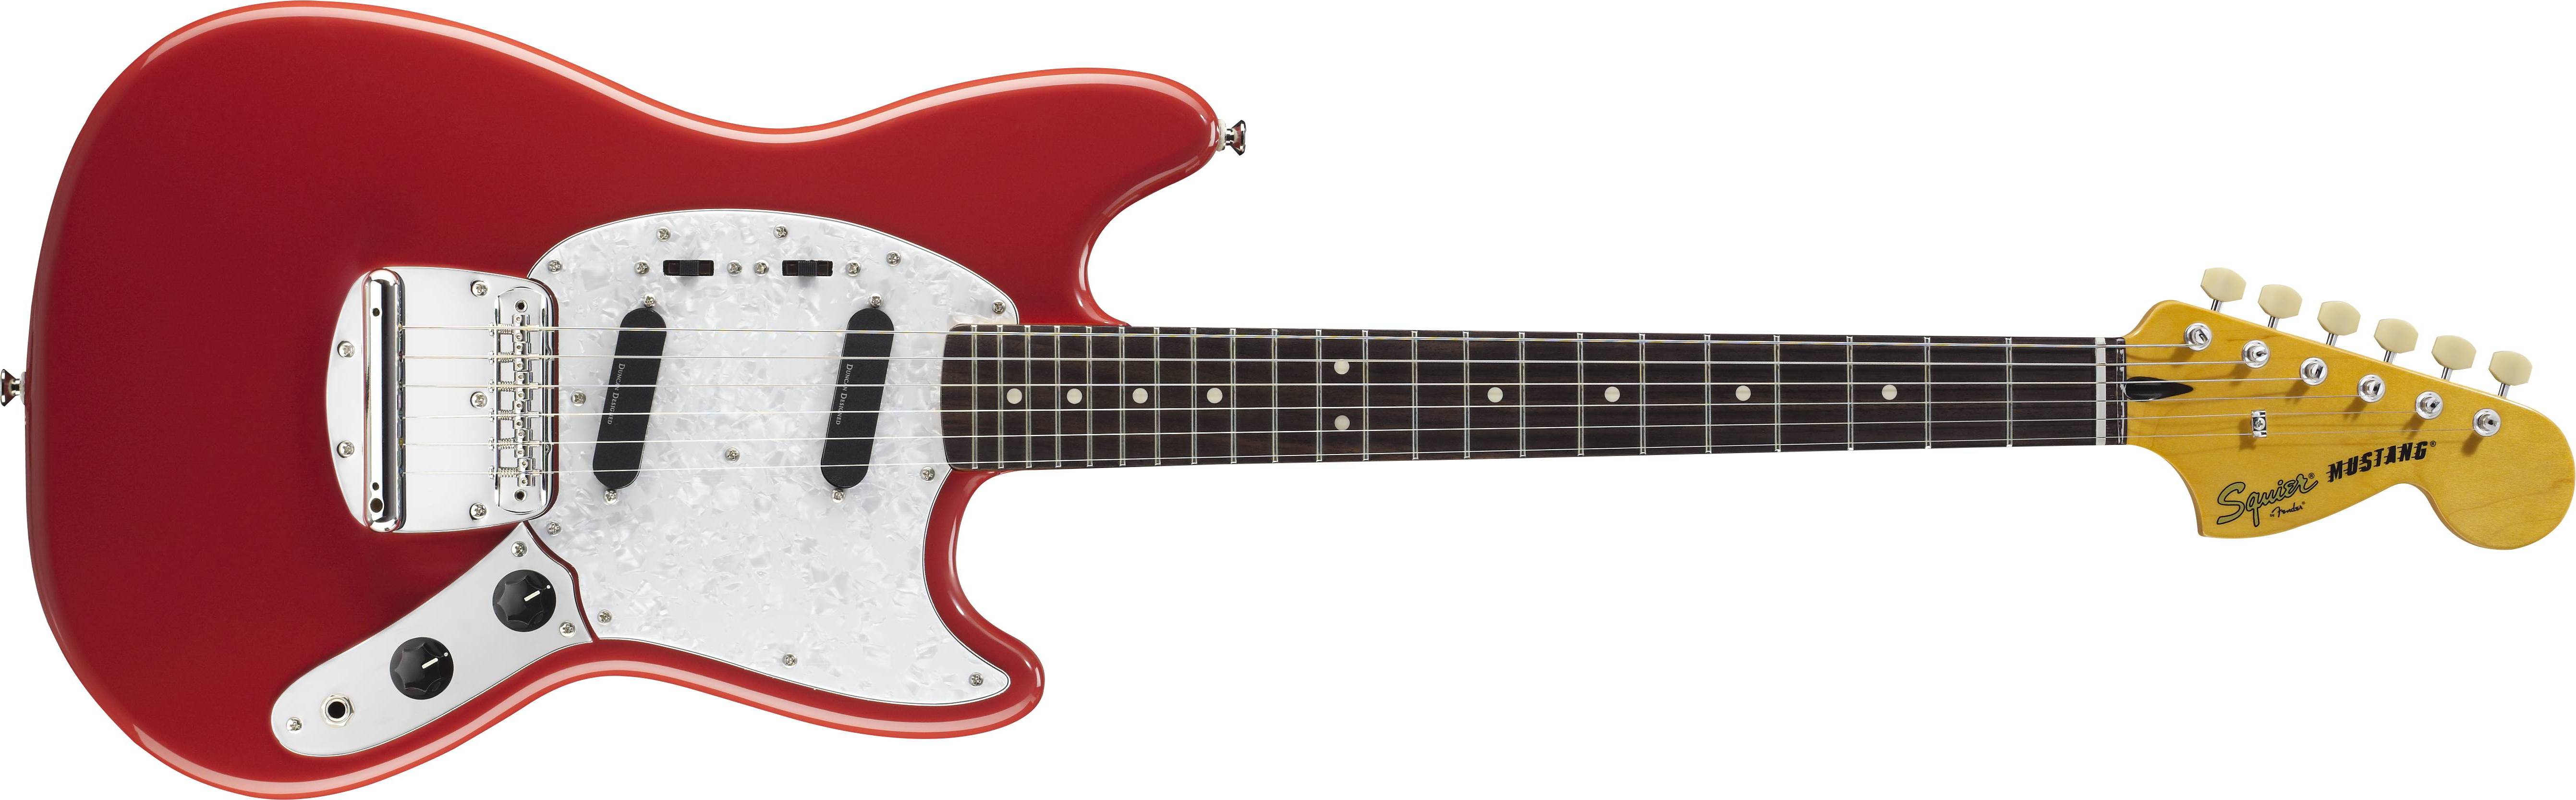 Электрогитара минск. Washburn xm12. Jay Turser JTA-Cra-6s ng. Гитары формы Mustang. Fender Mustang Red Azusa.